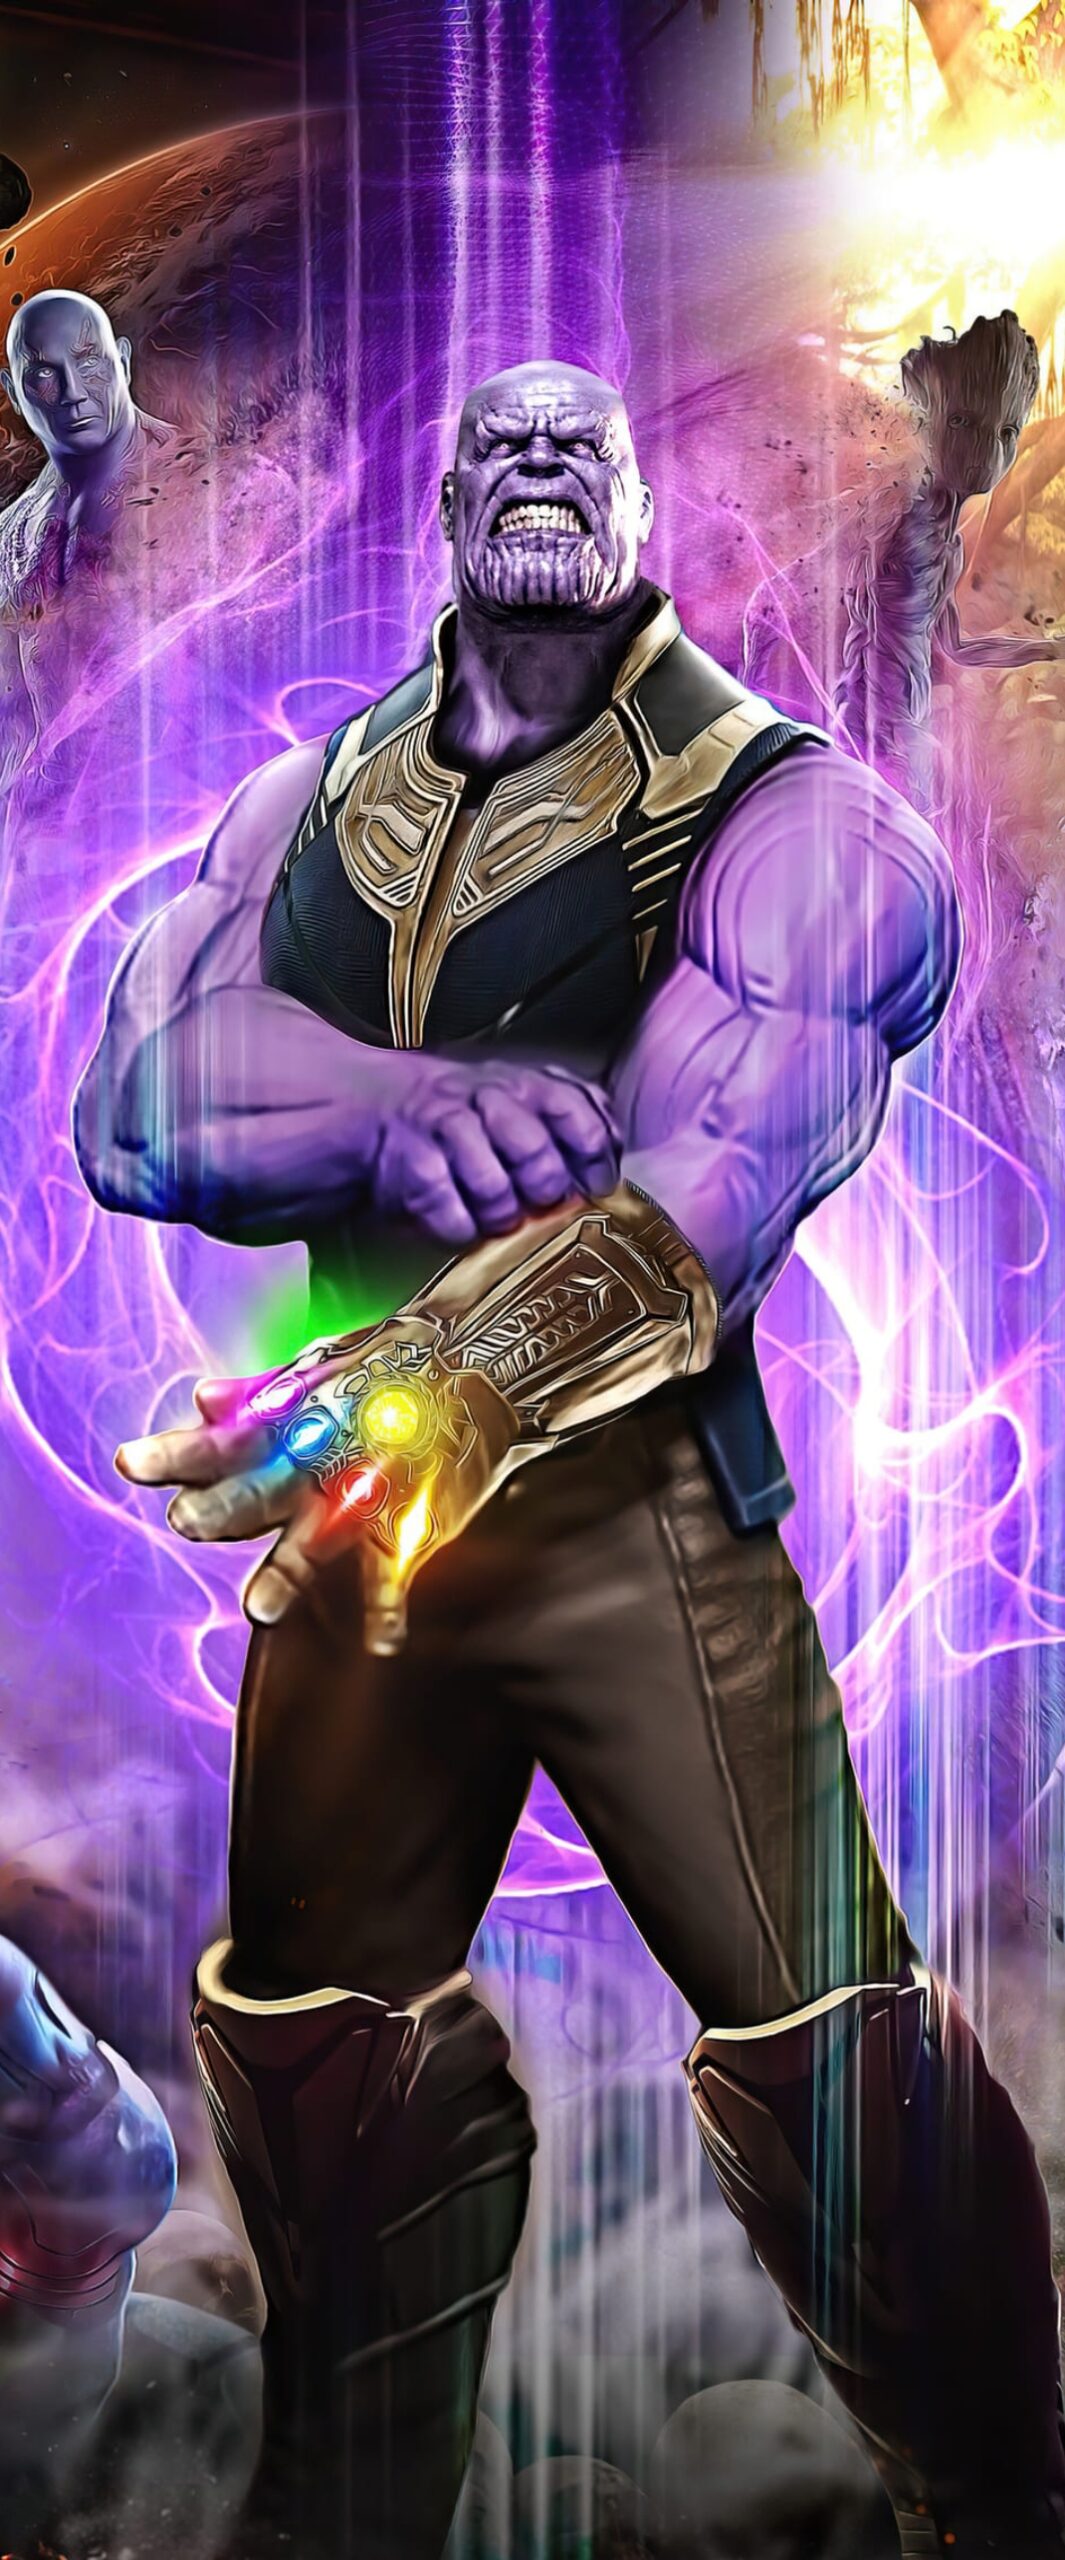 Thanos iPhone Home Screen Wallpaper